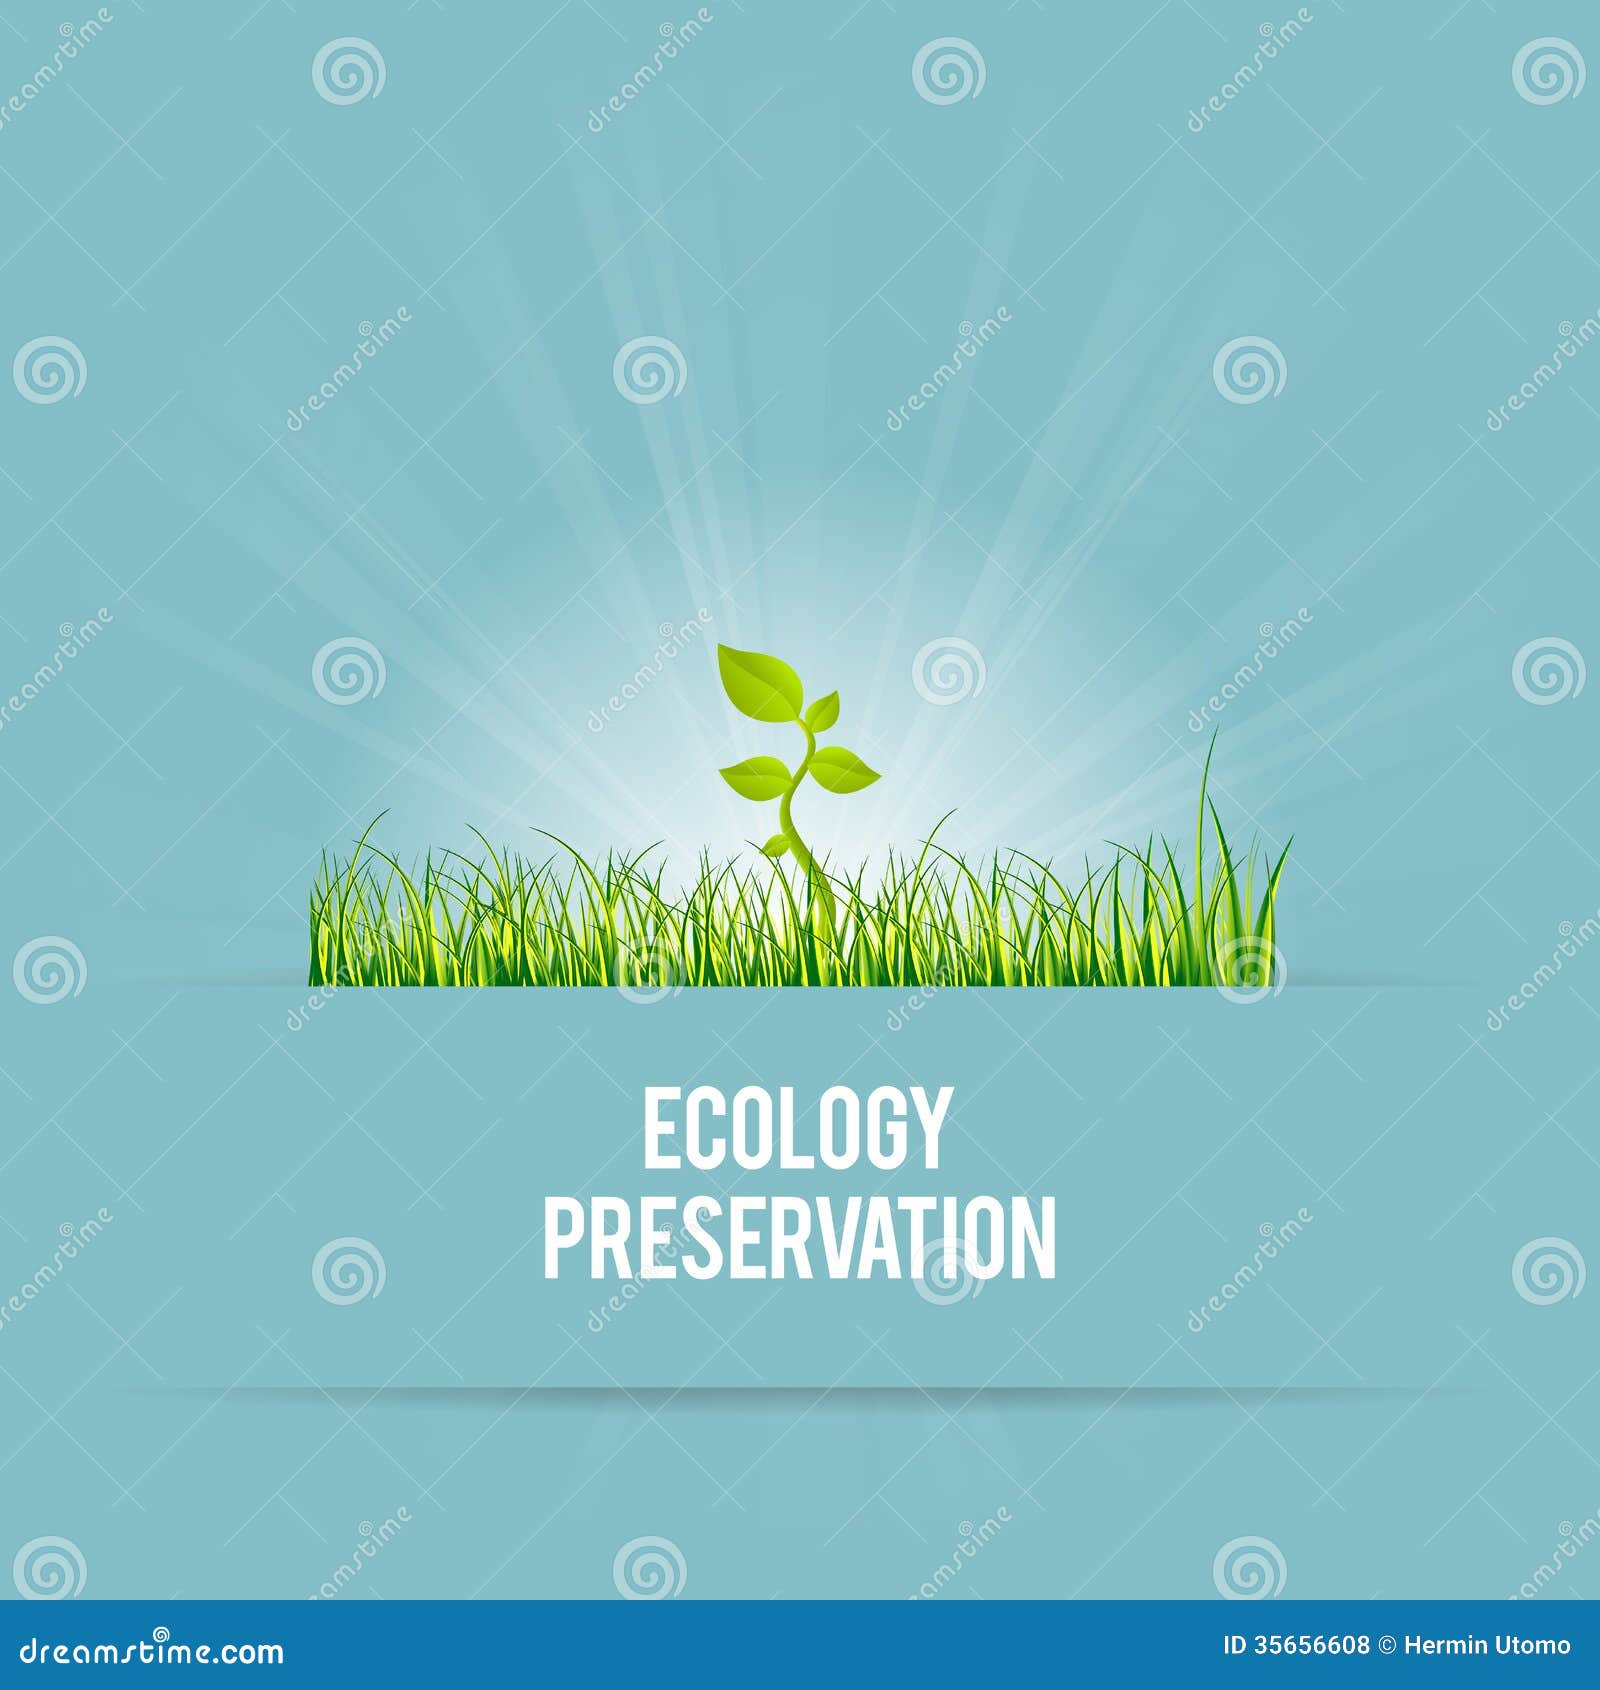 ecology preservation